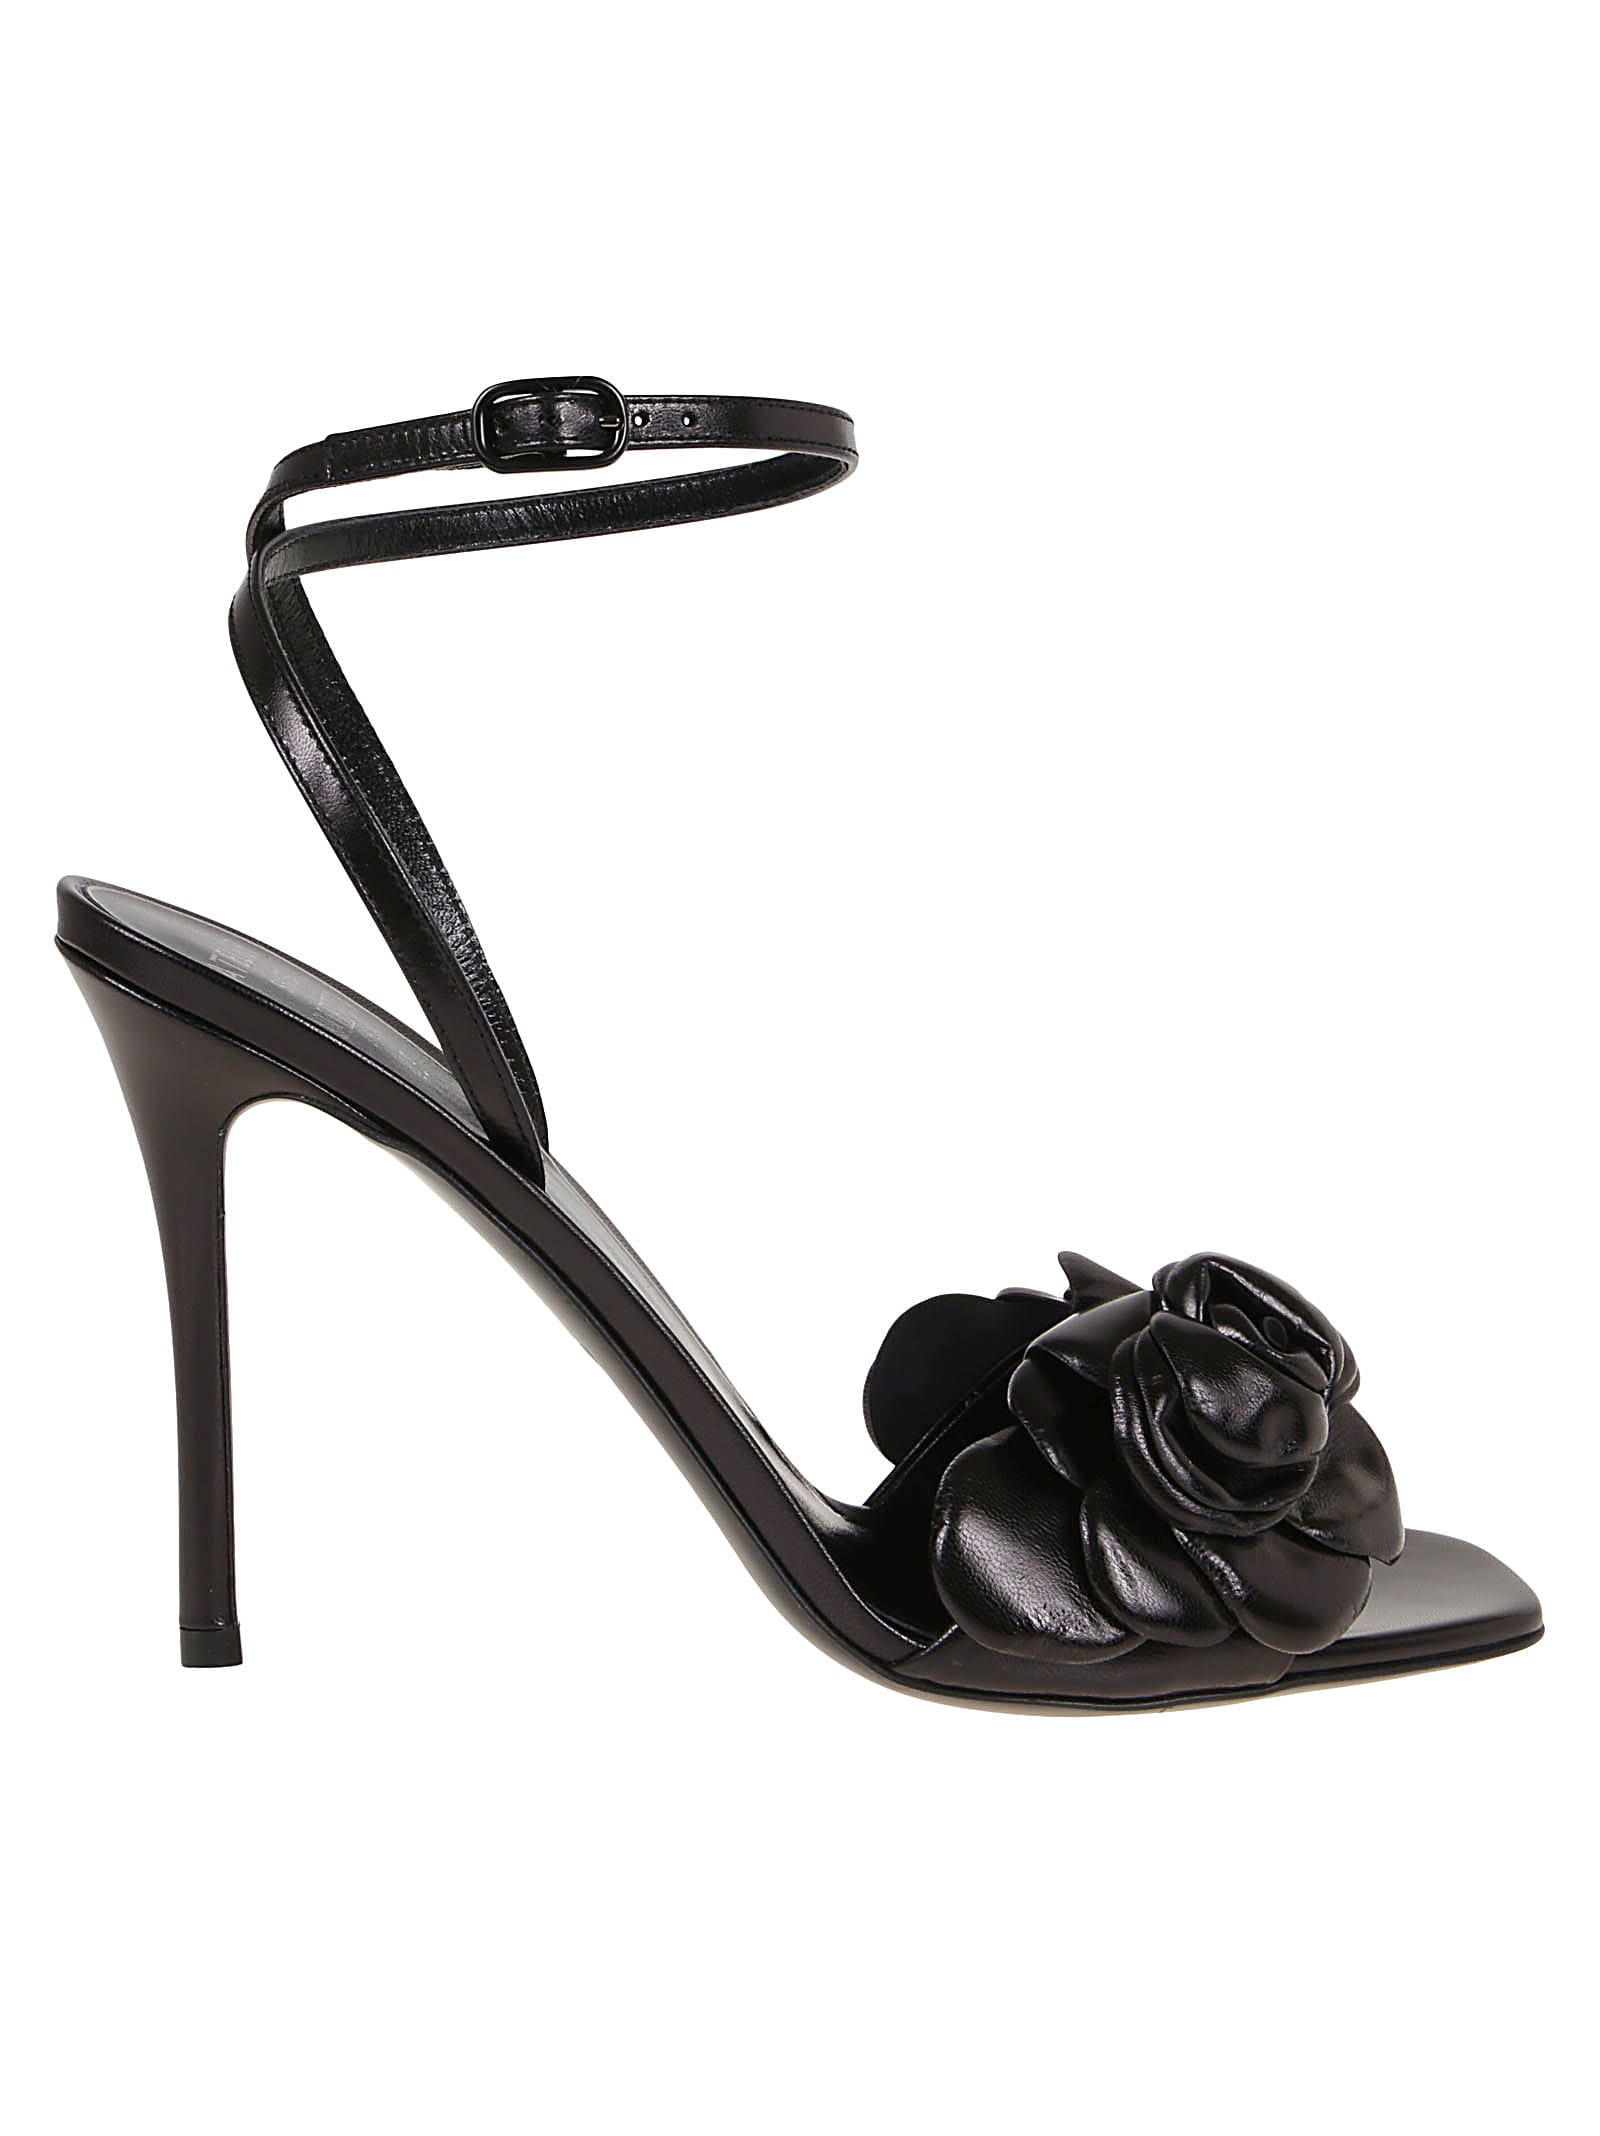 Valentino Garavani sandal atelier shoes 03 rose edition